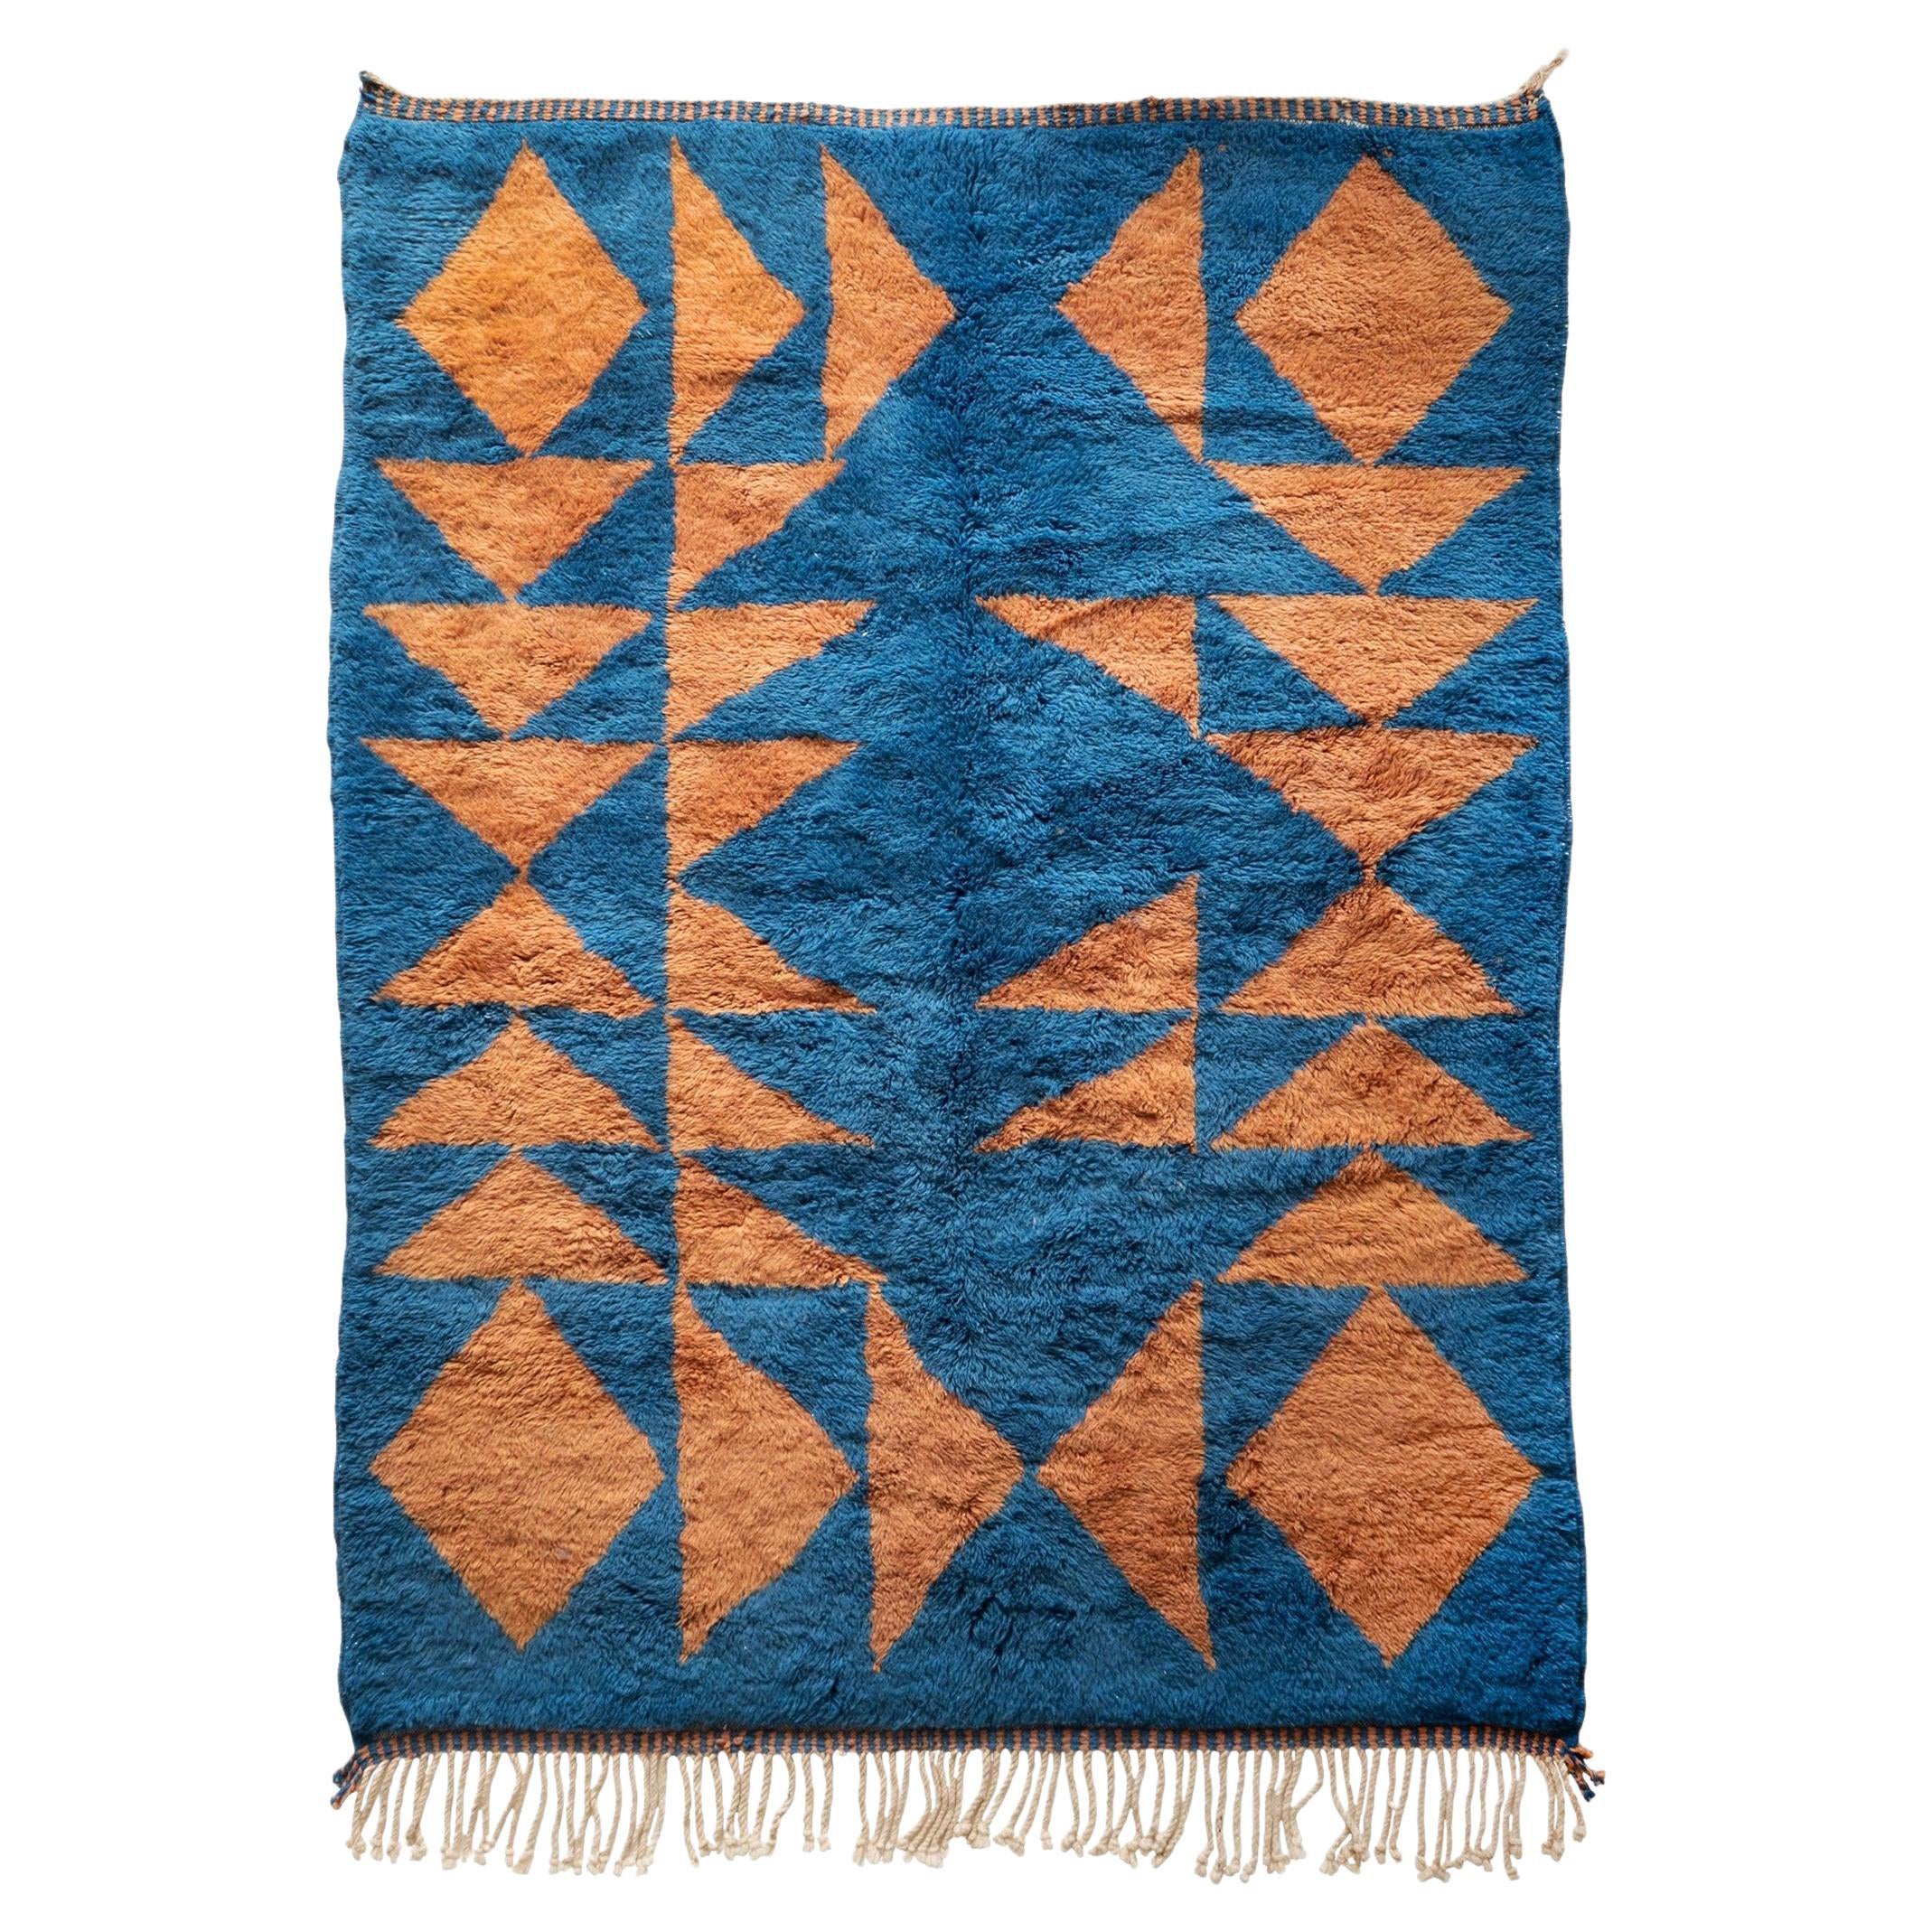 Moroccan Beni Mrirt rug 6’x9’, Blue Color Triangle Pattern Rug, Custom-Made